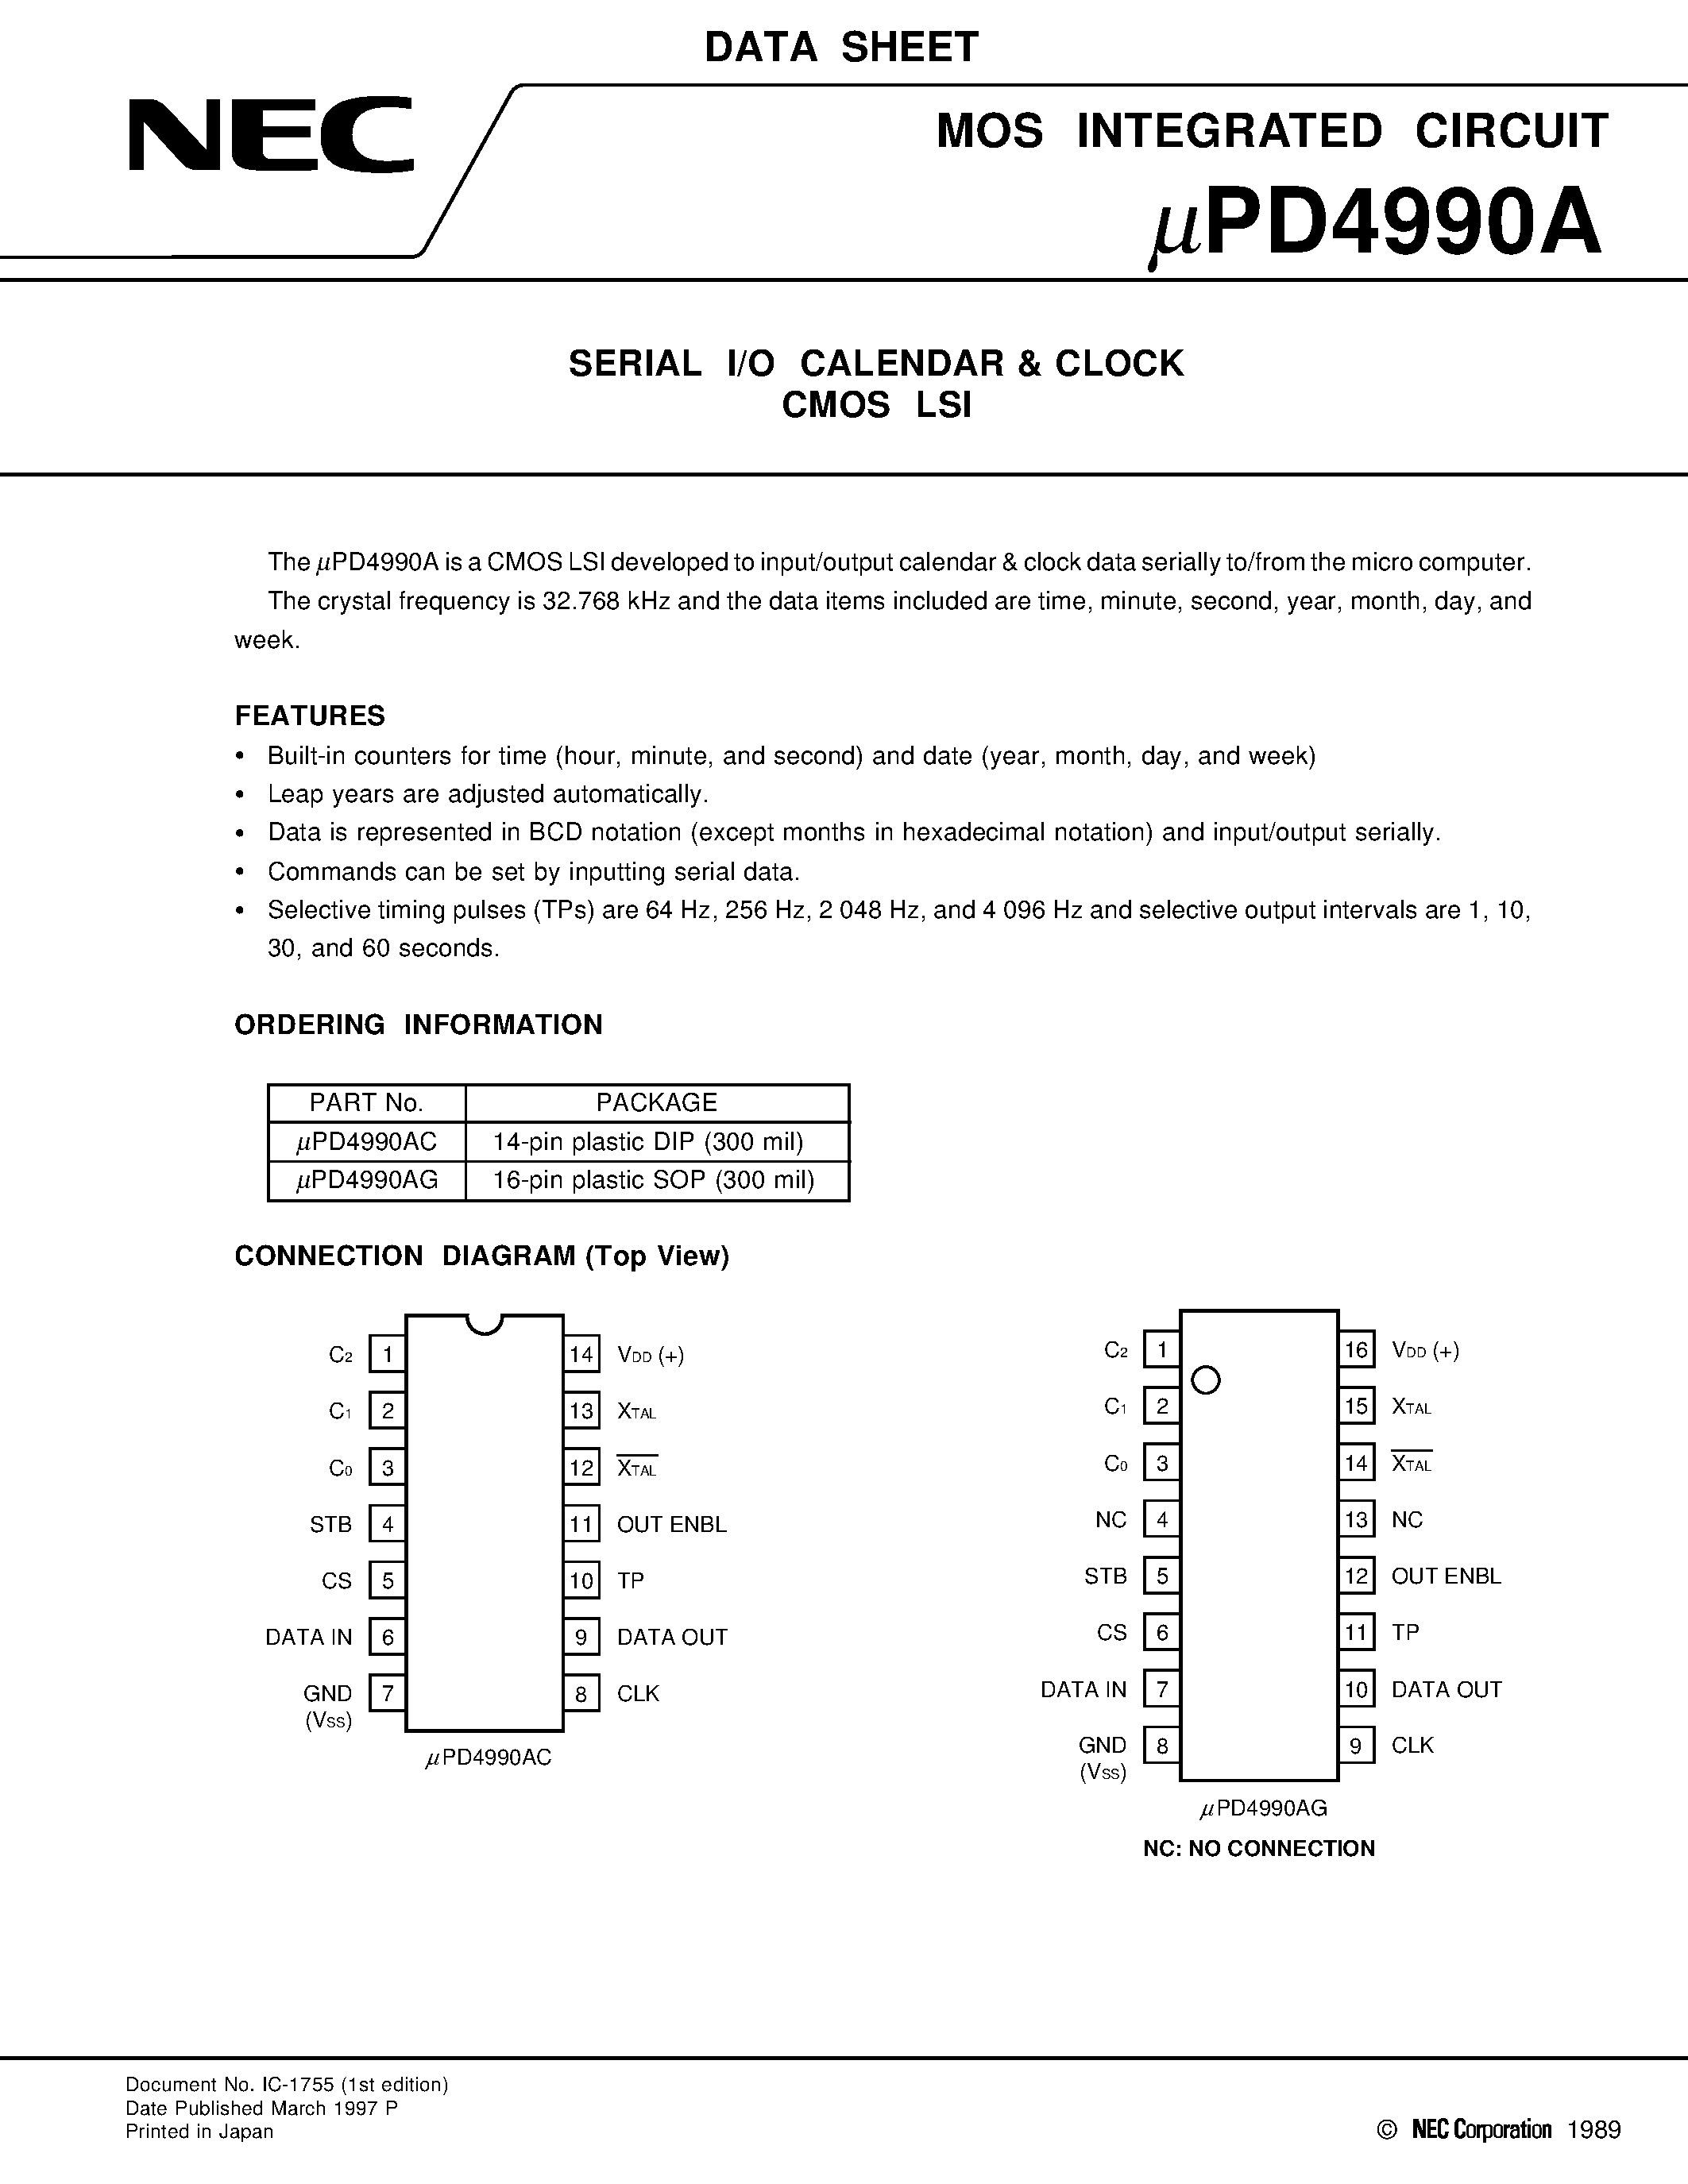 Datasheet UPD4990A - SERIAL I/O CALENDAR & CLOCK CMOS LSI page 1